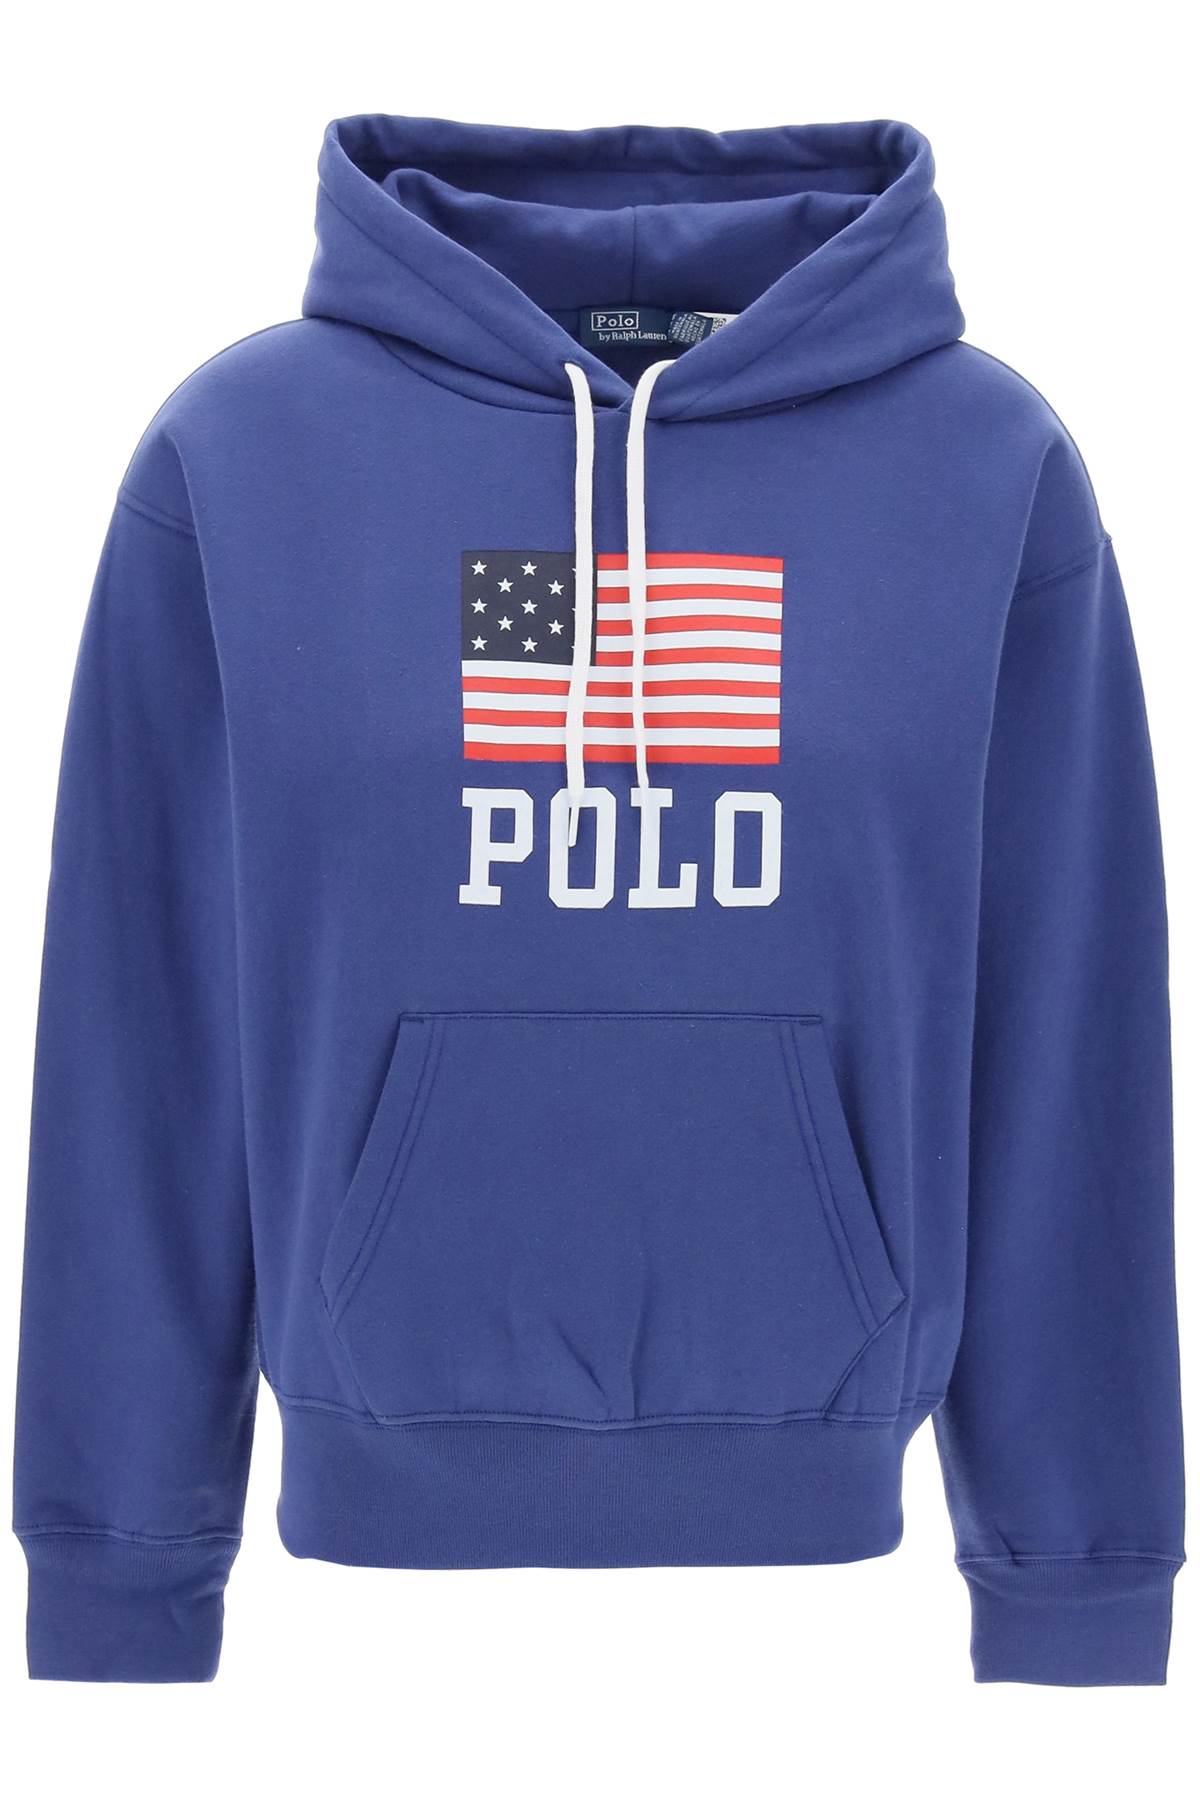 Polo ralph lauren hooded sweatshirt with flag print-0